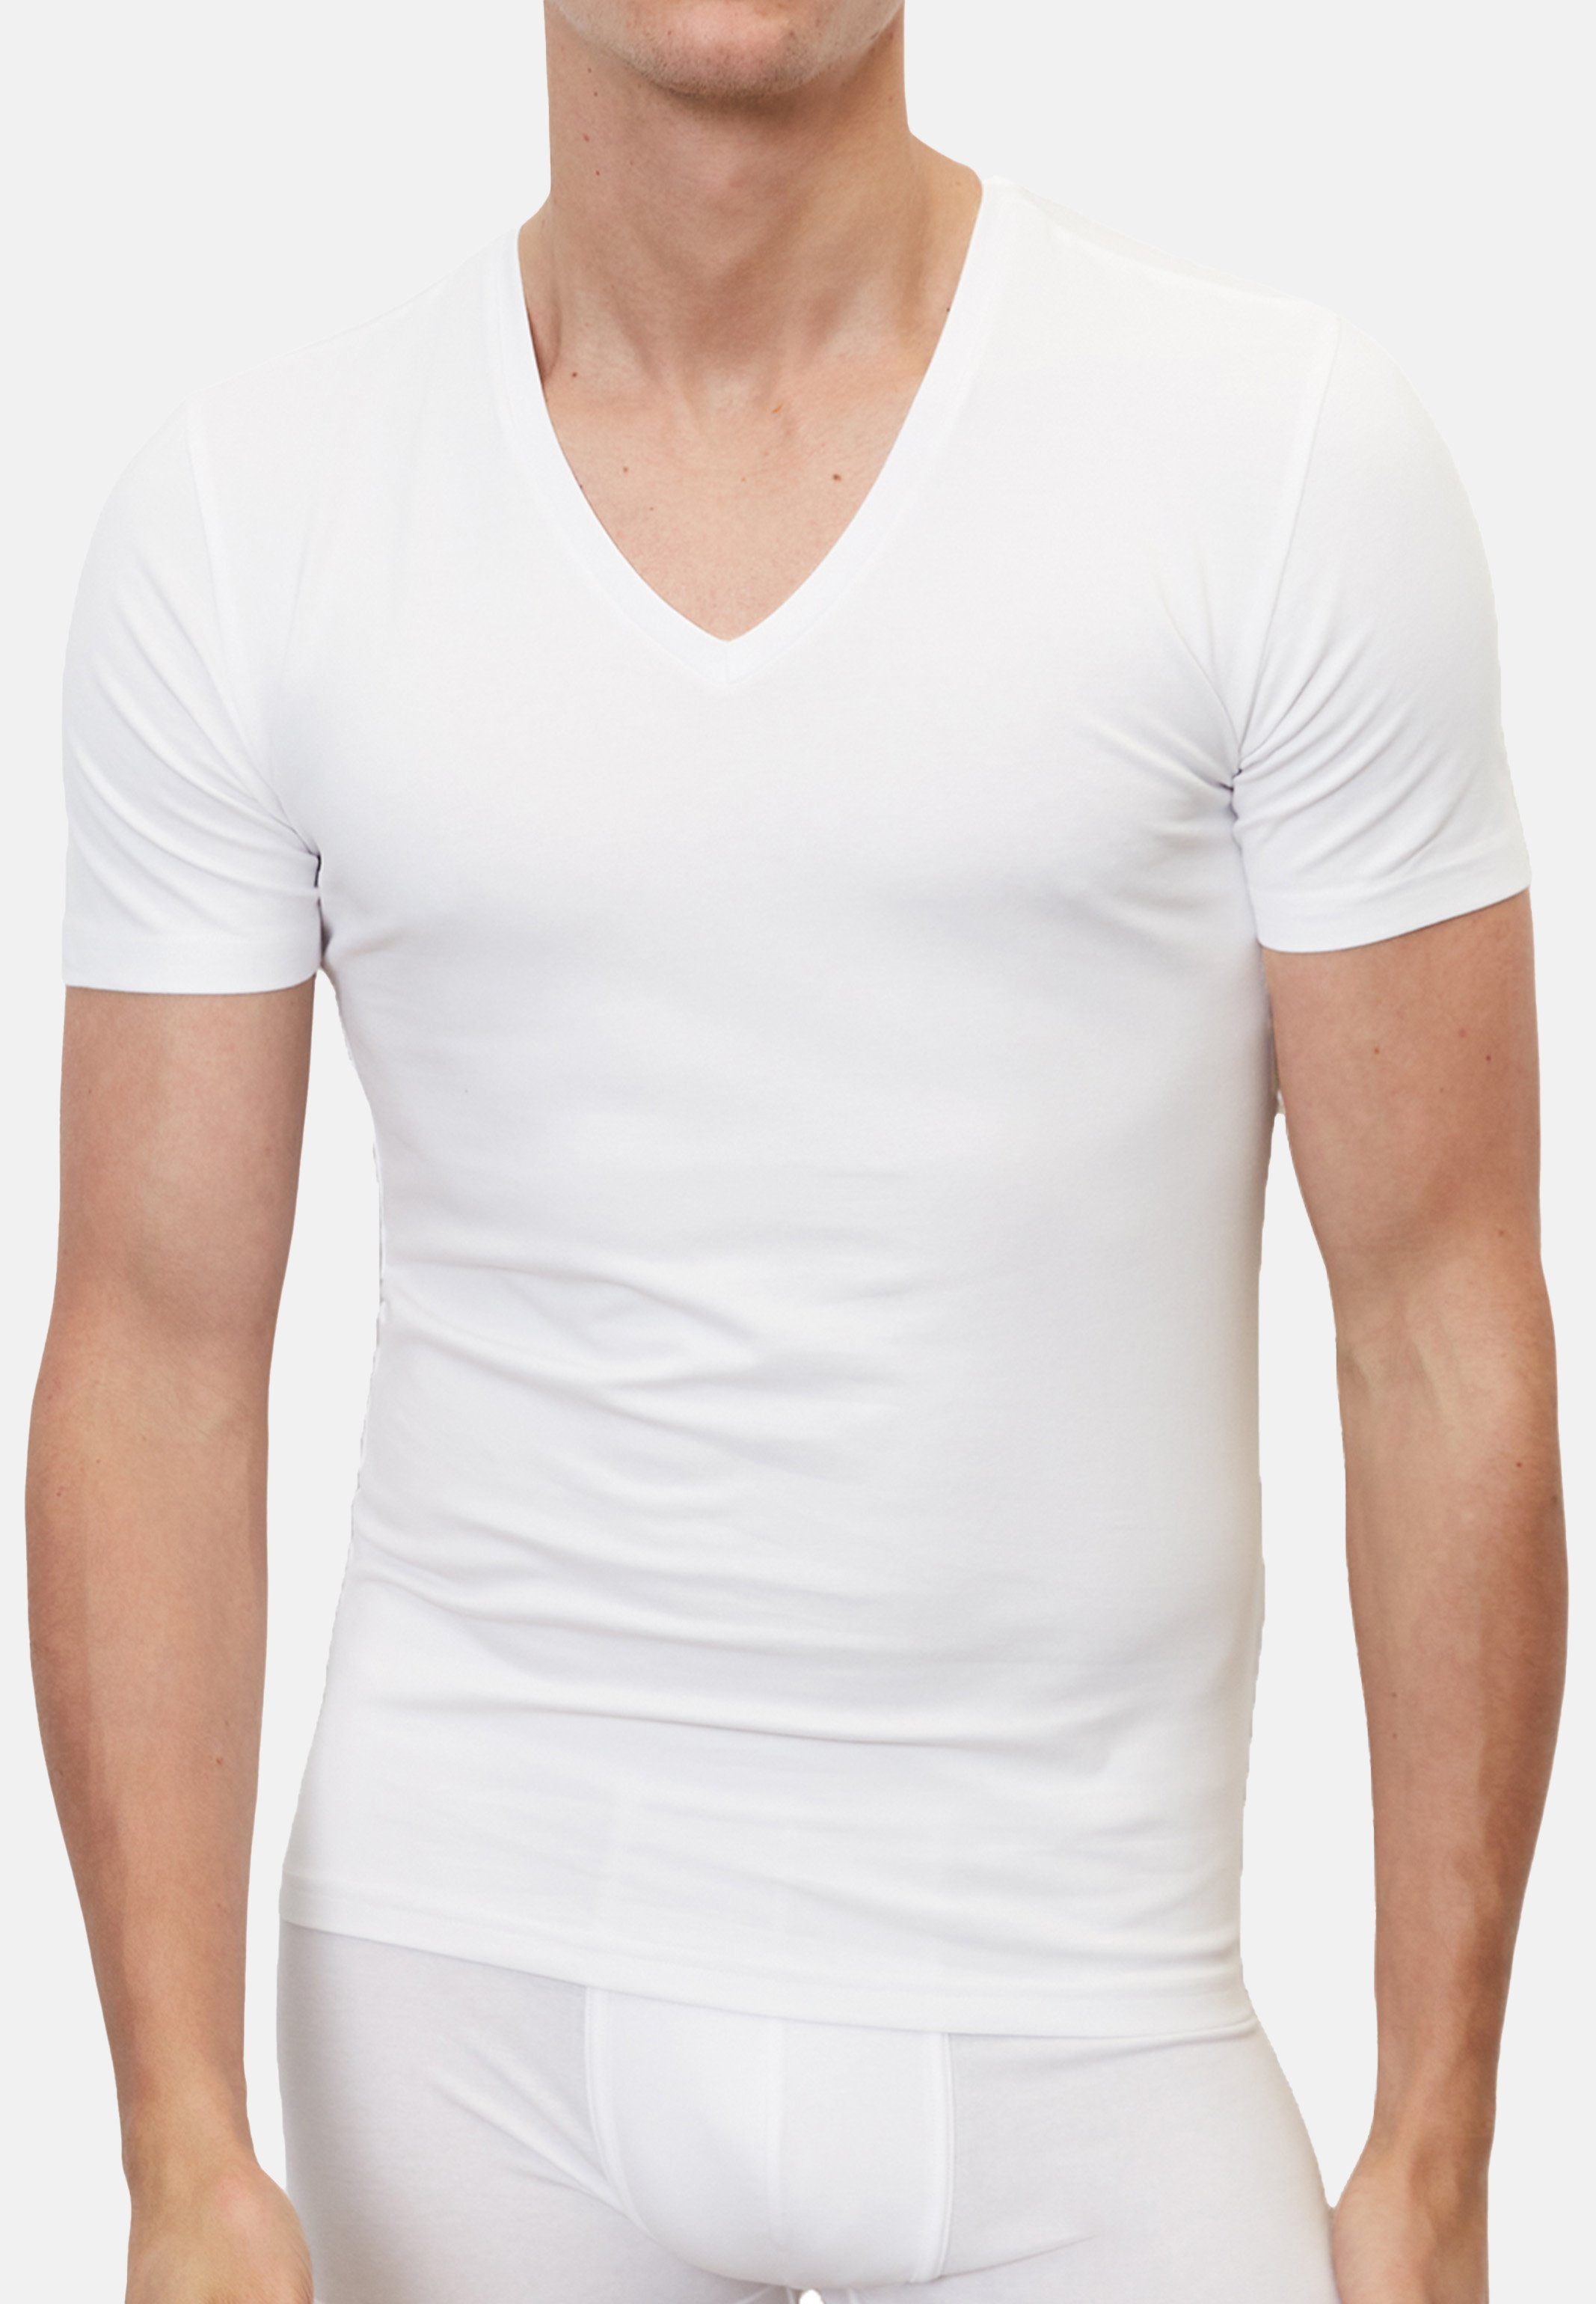 Marc O'Polo Unterhemd Weiß 4-St) Cotton Baumwolle - Langarm - Organic Shirt 4er / Essentials Unterhemd Pack (Spar-Set